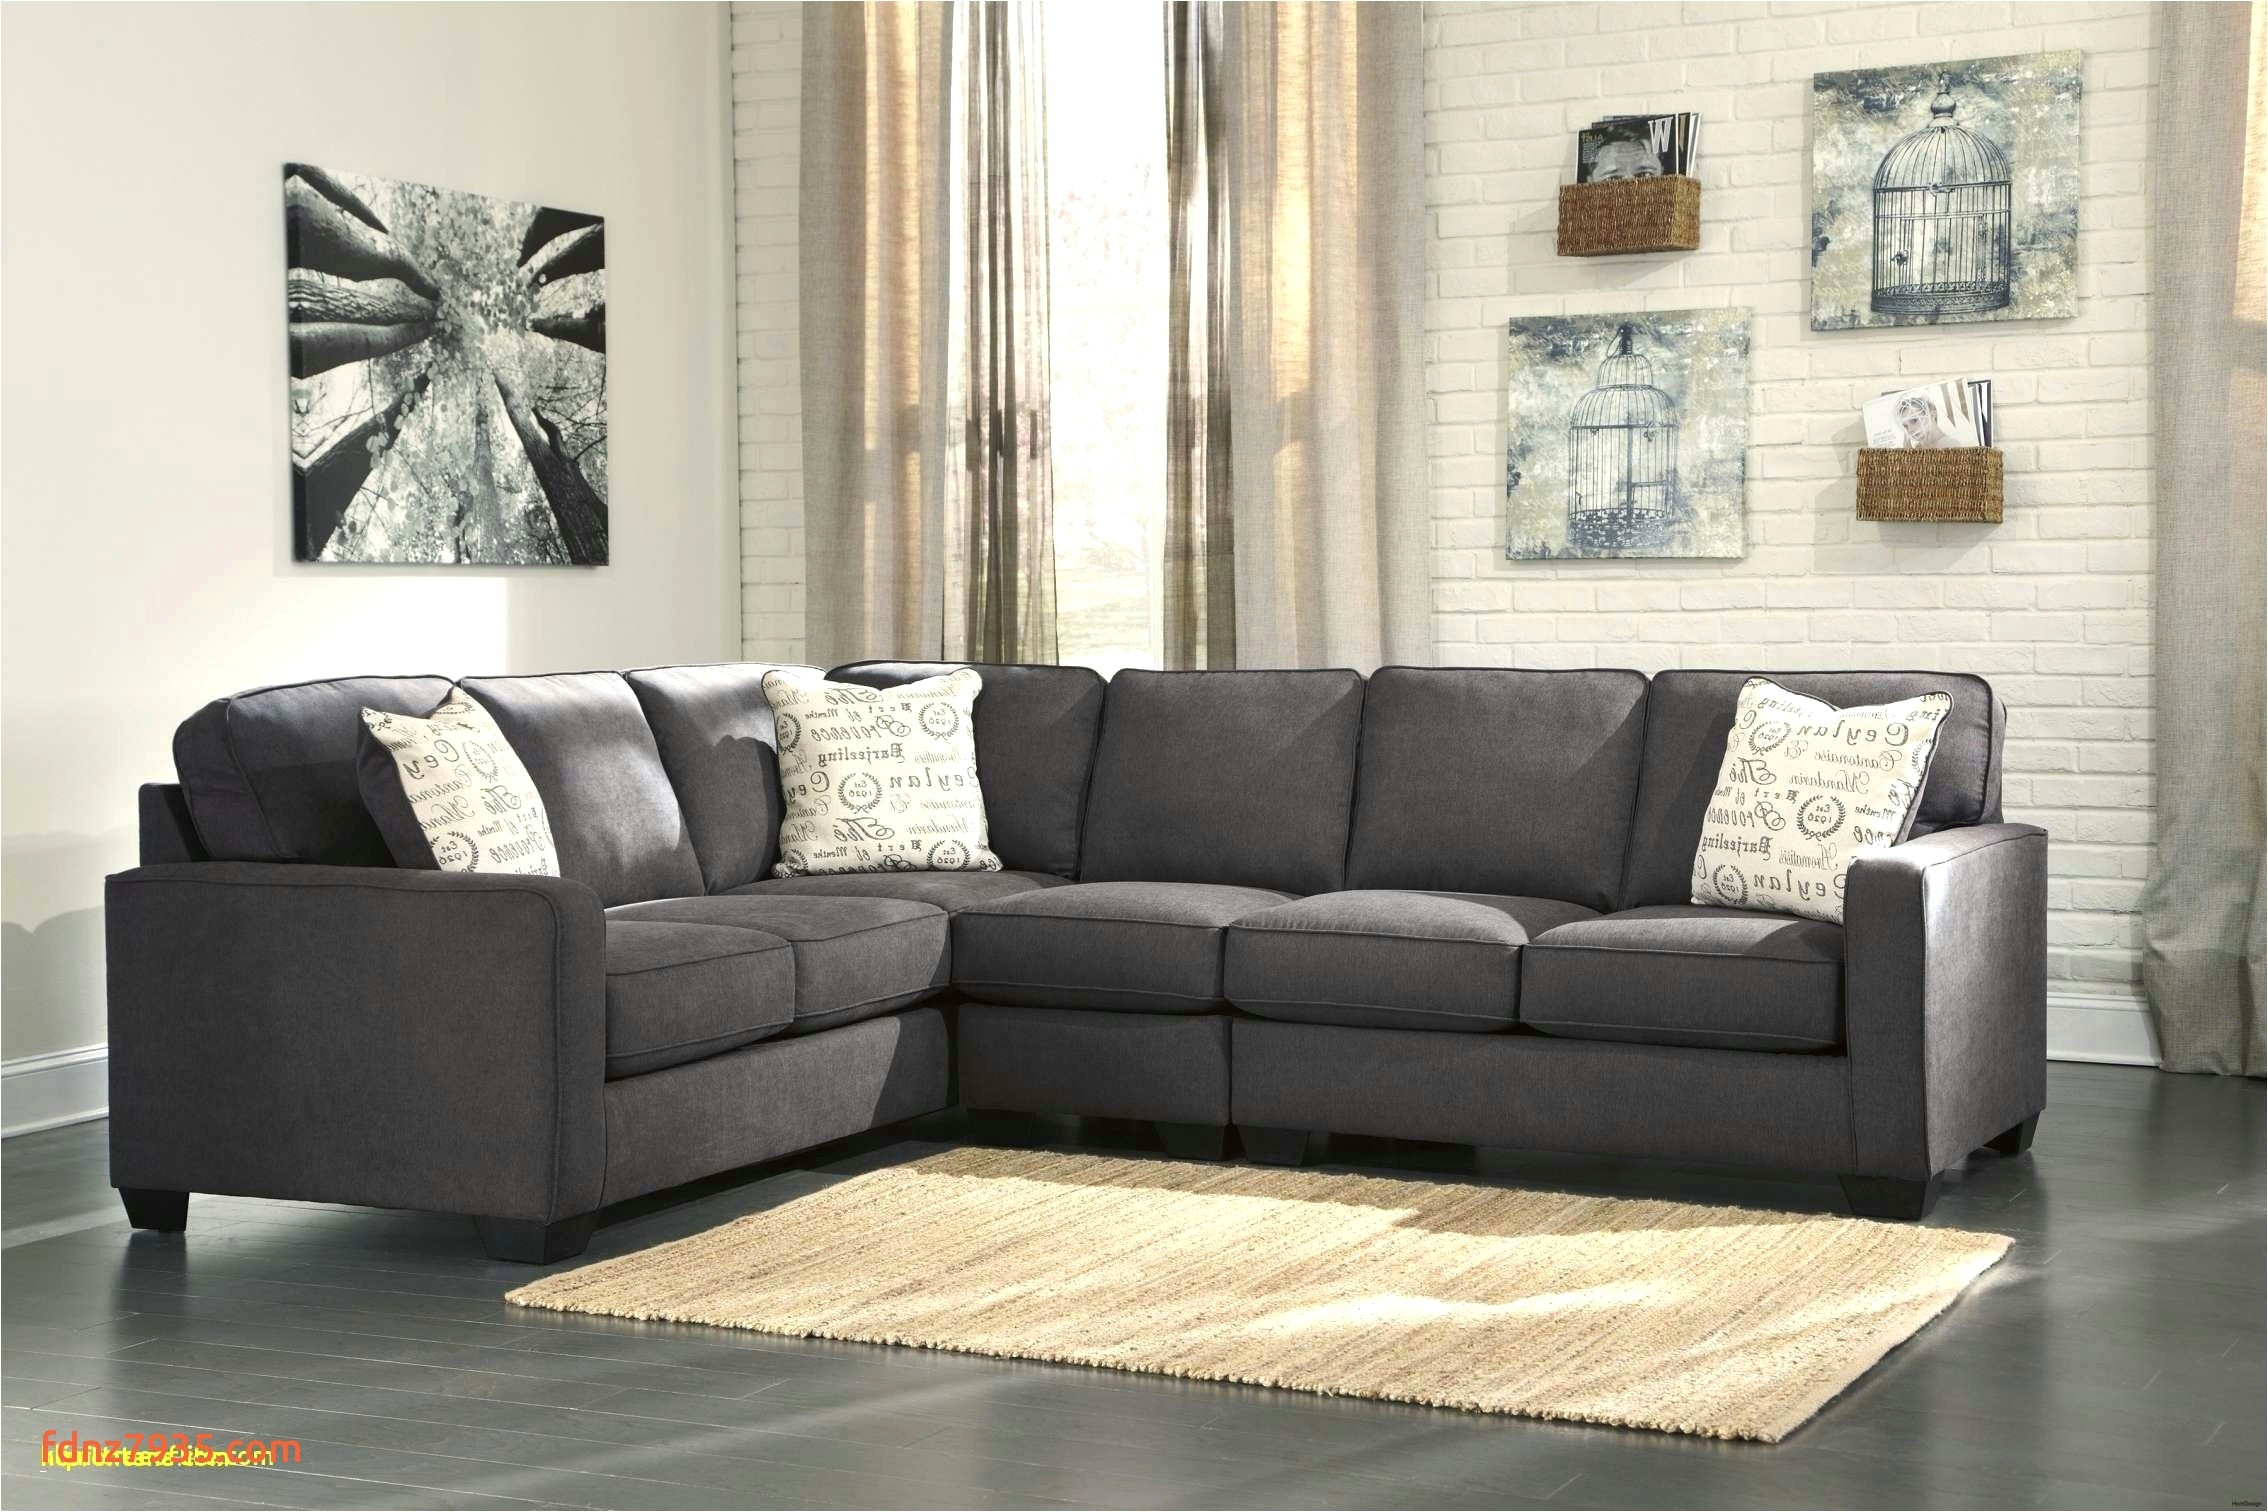 Drawing L Shape sofa L Shaped Couch Fresh sofa Design